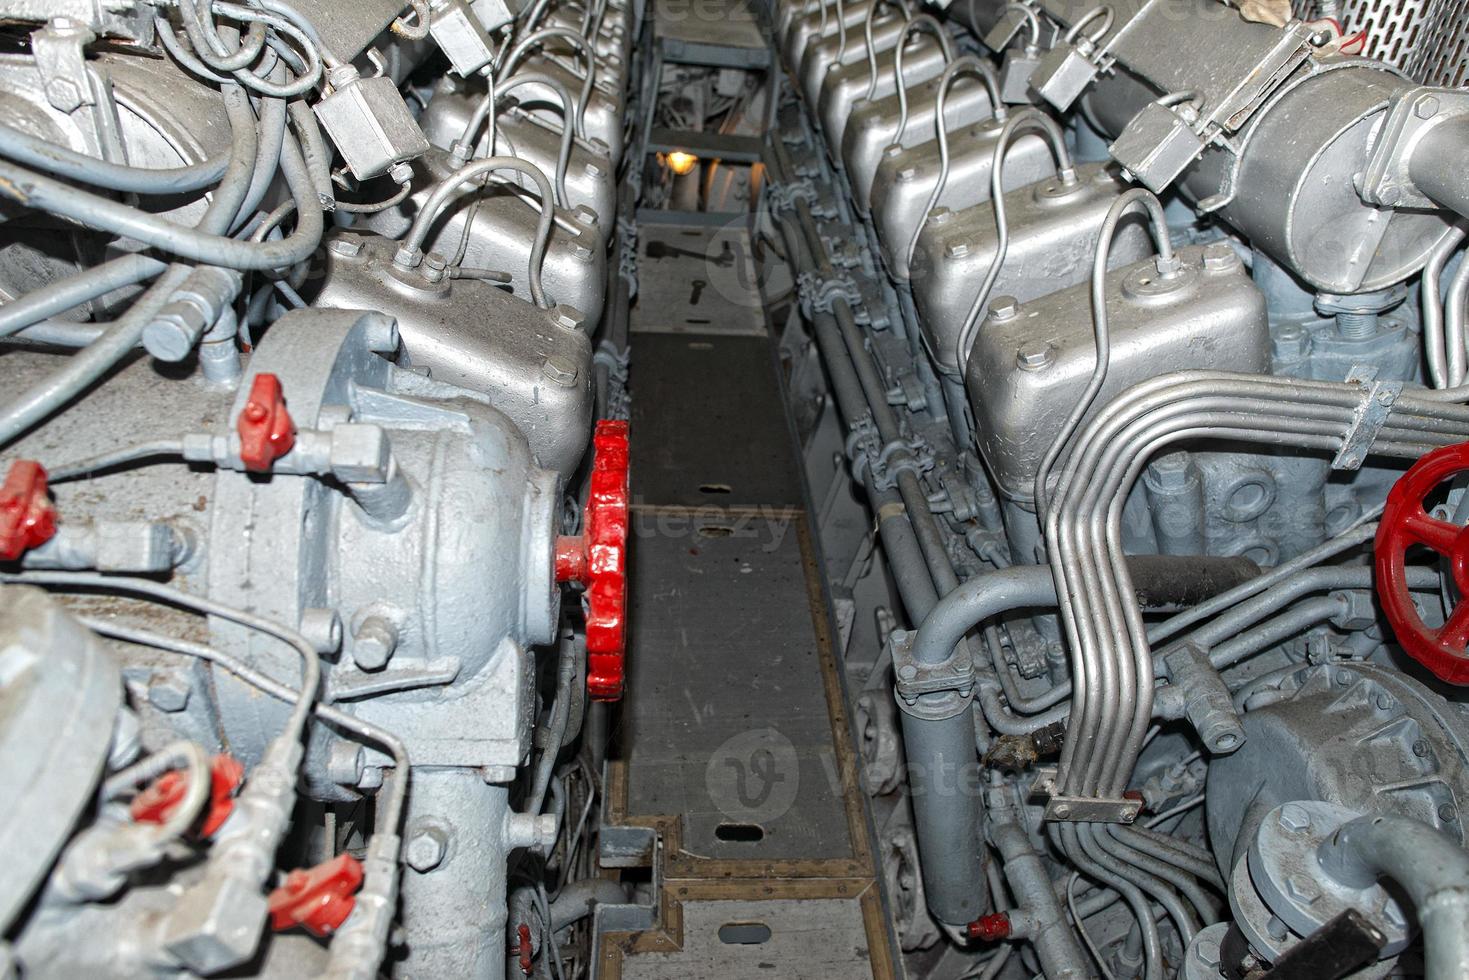 onderzeeër diesel motoren foto